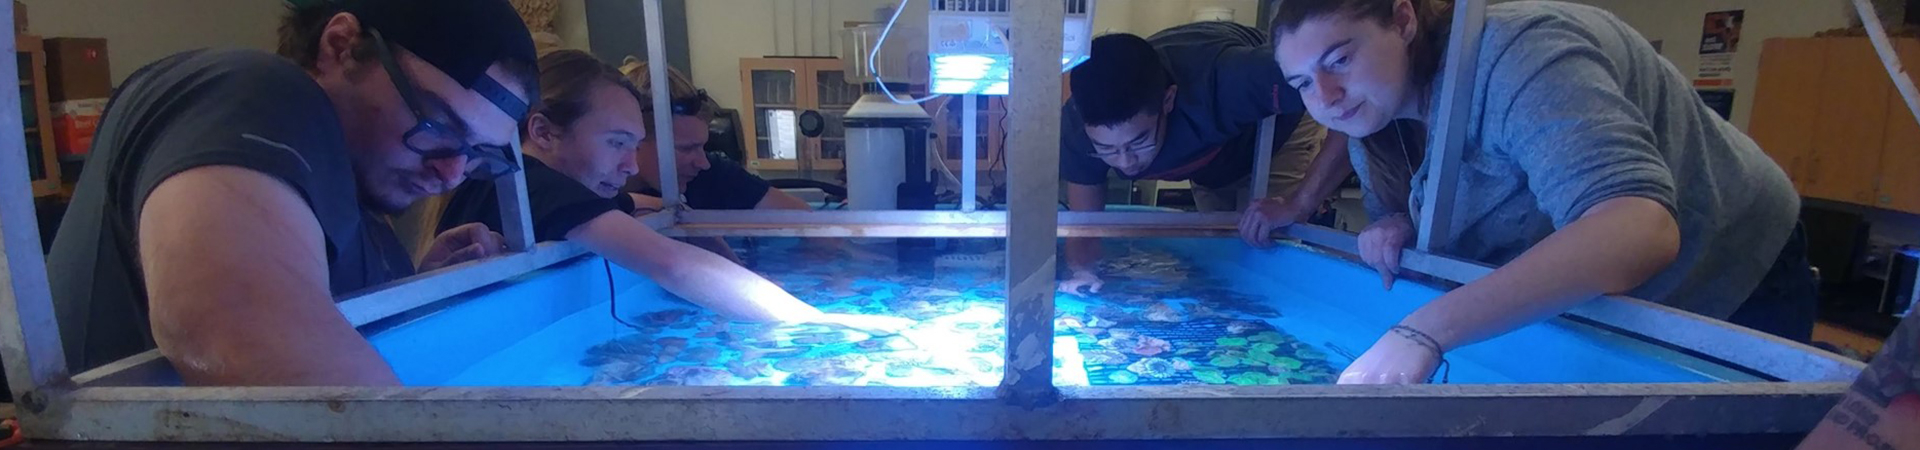 students working on aquarium